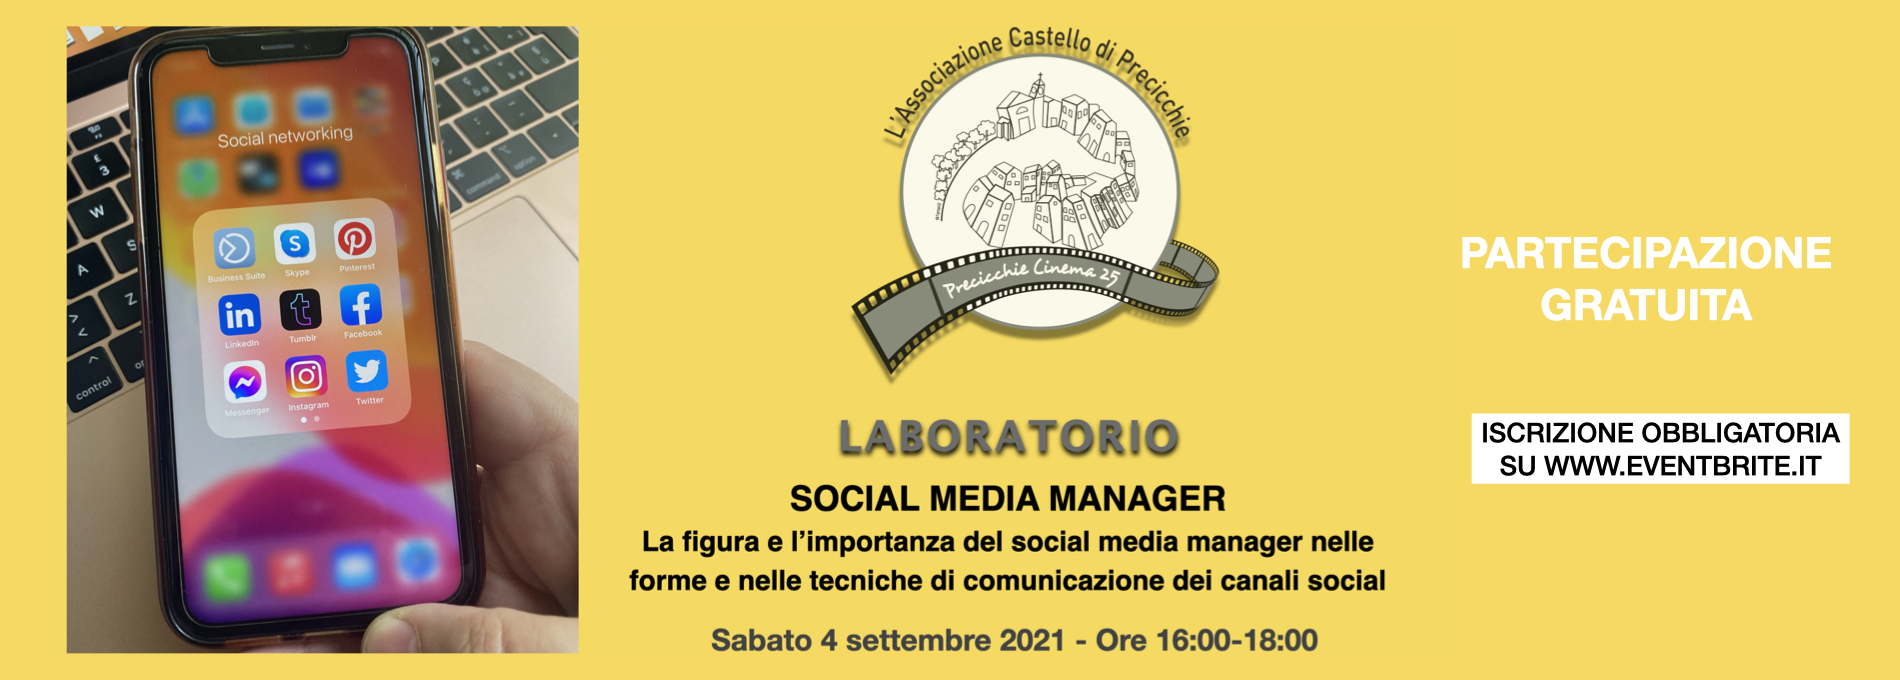 LABORATORIO SOCIAL MEDIA MANAGER